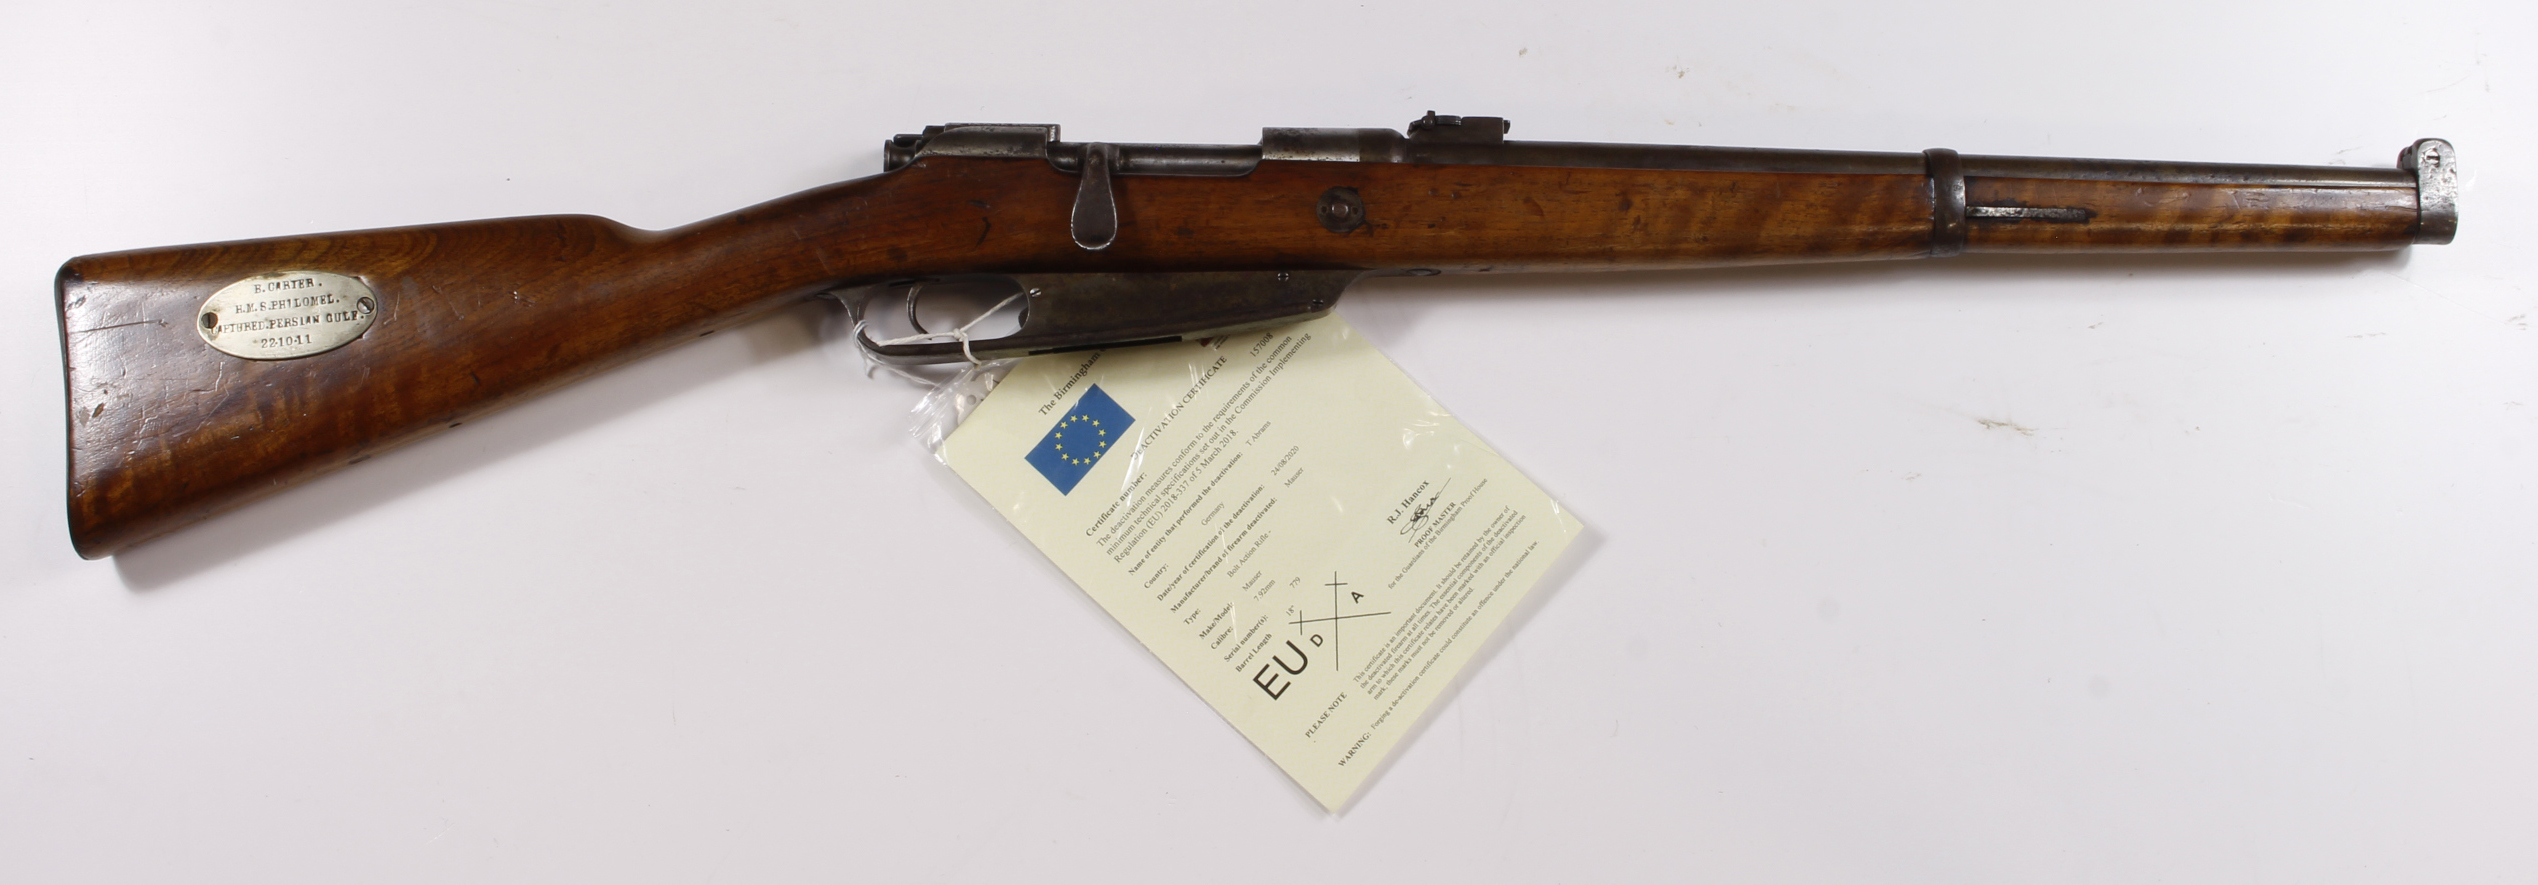 Carbine: a rare and interesting Imperial German M1888 Mauser Carbine, 7.92mm Cal. Barrel 18". Breech